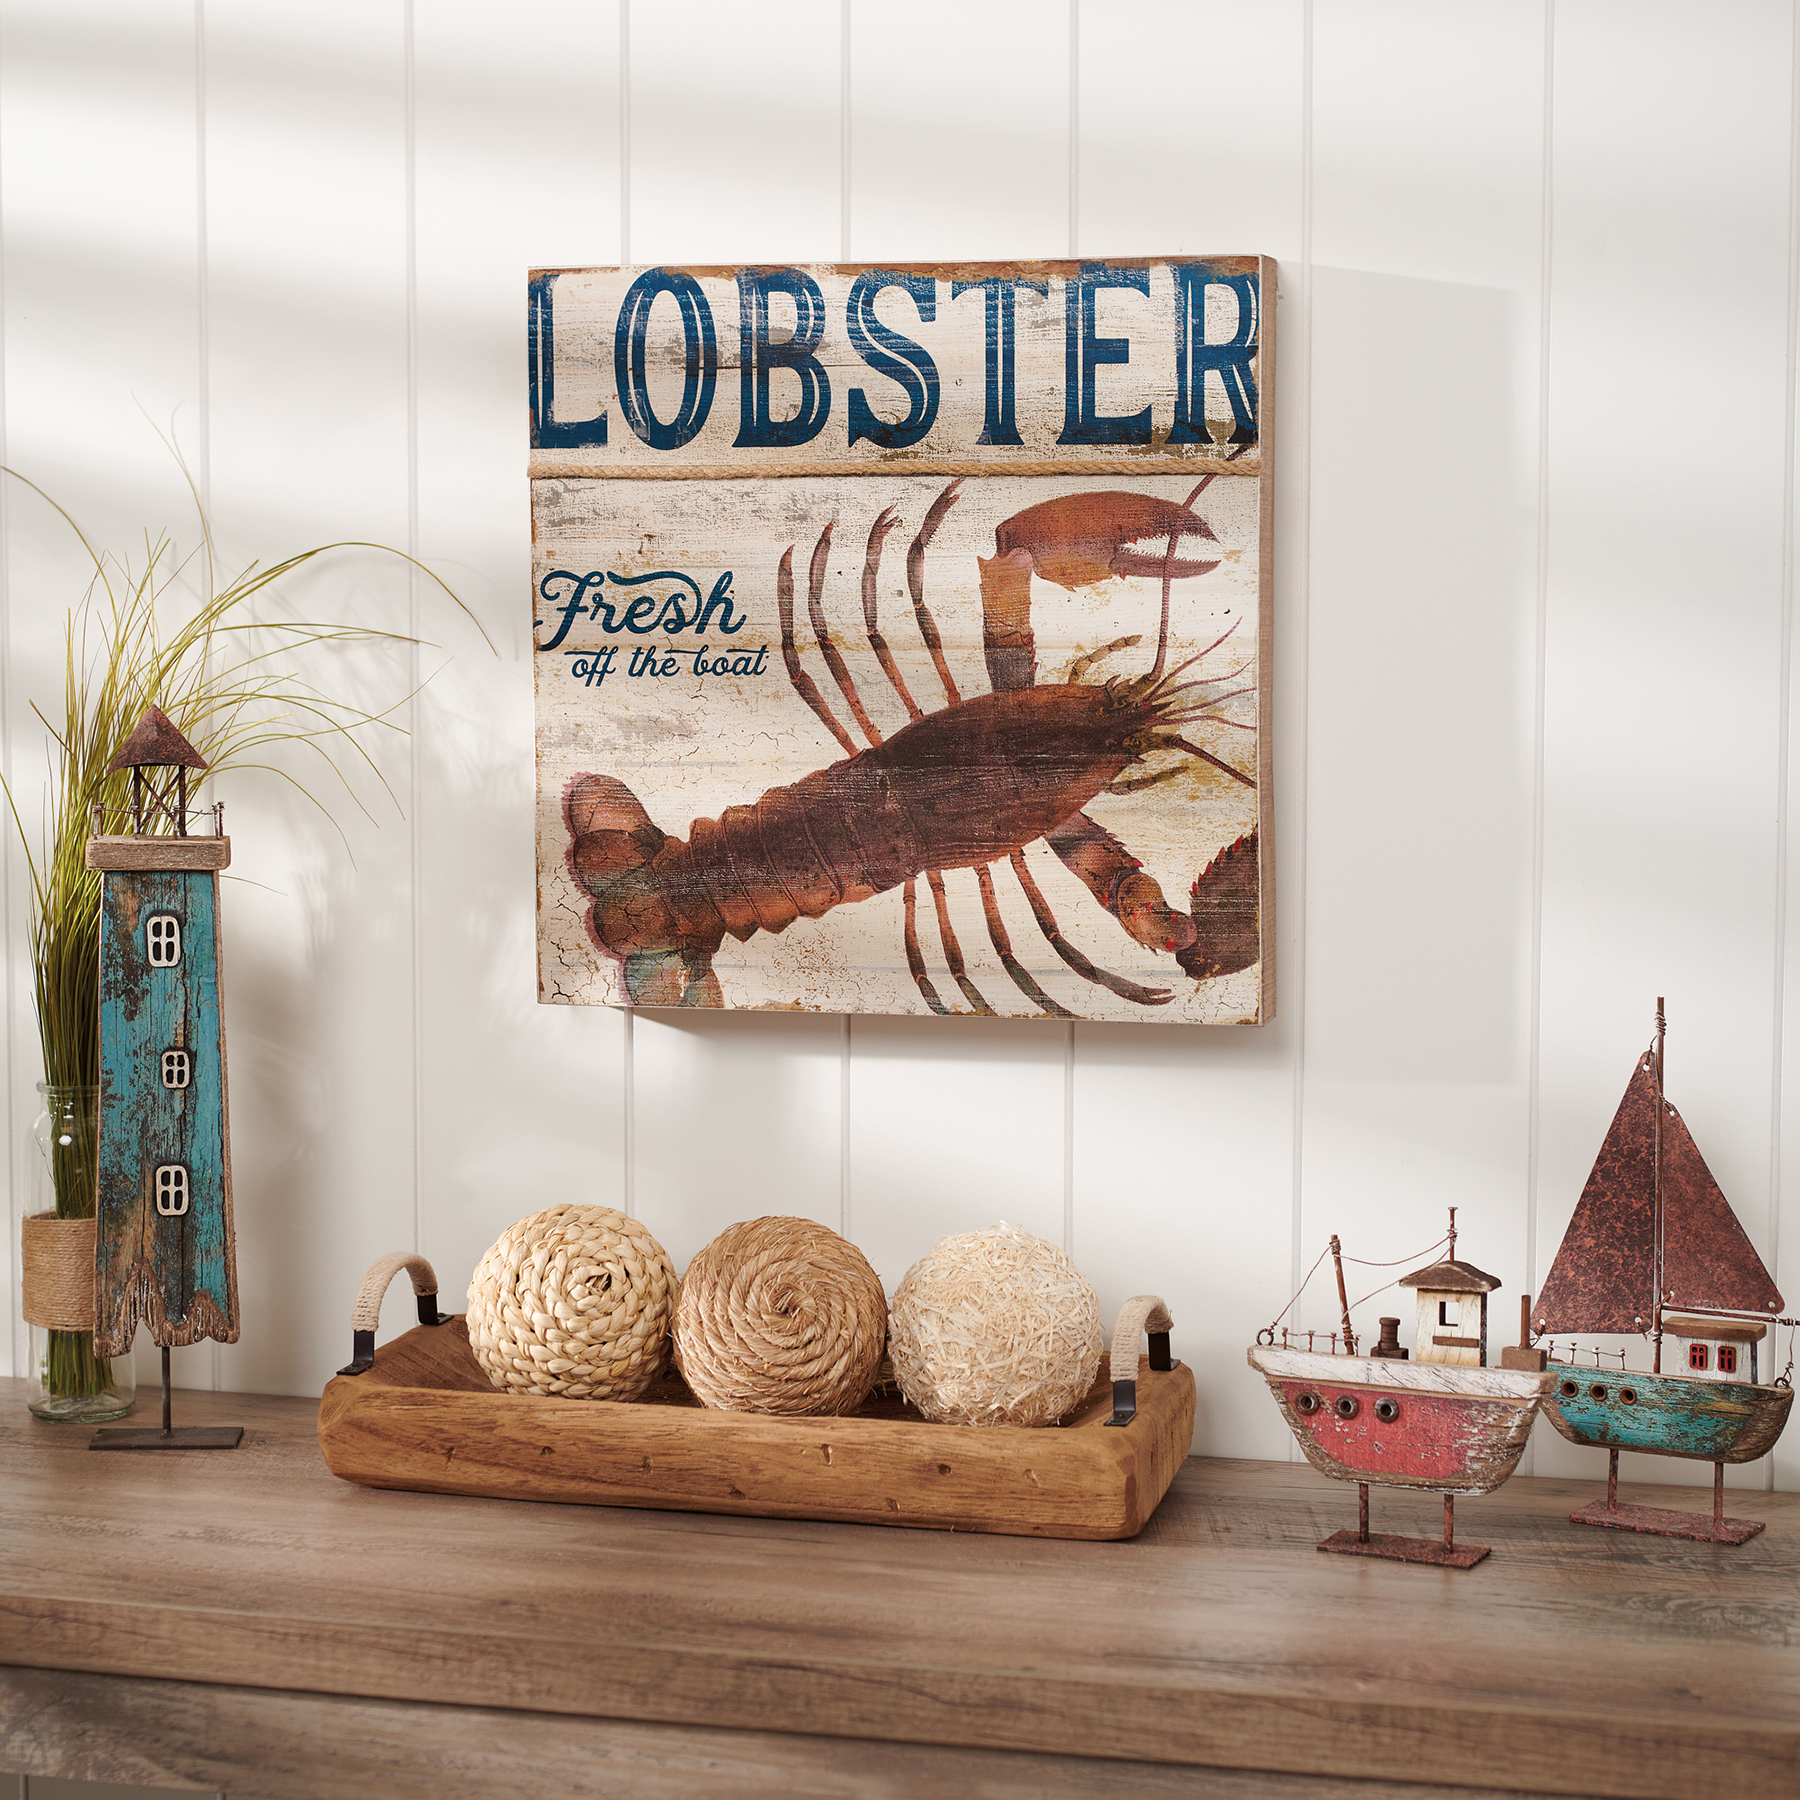 Small Lobster Styro Box/Lid